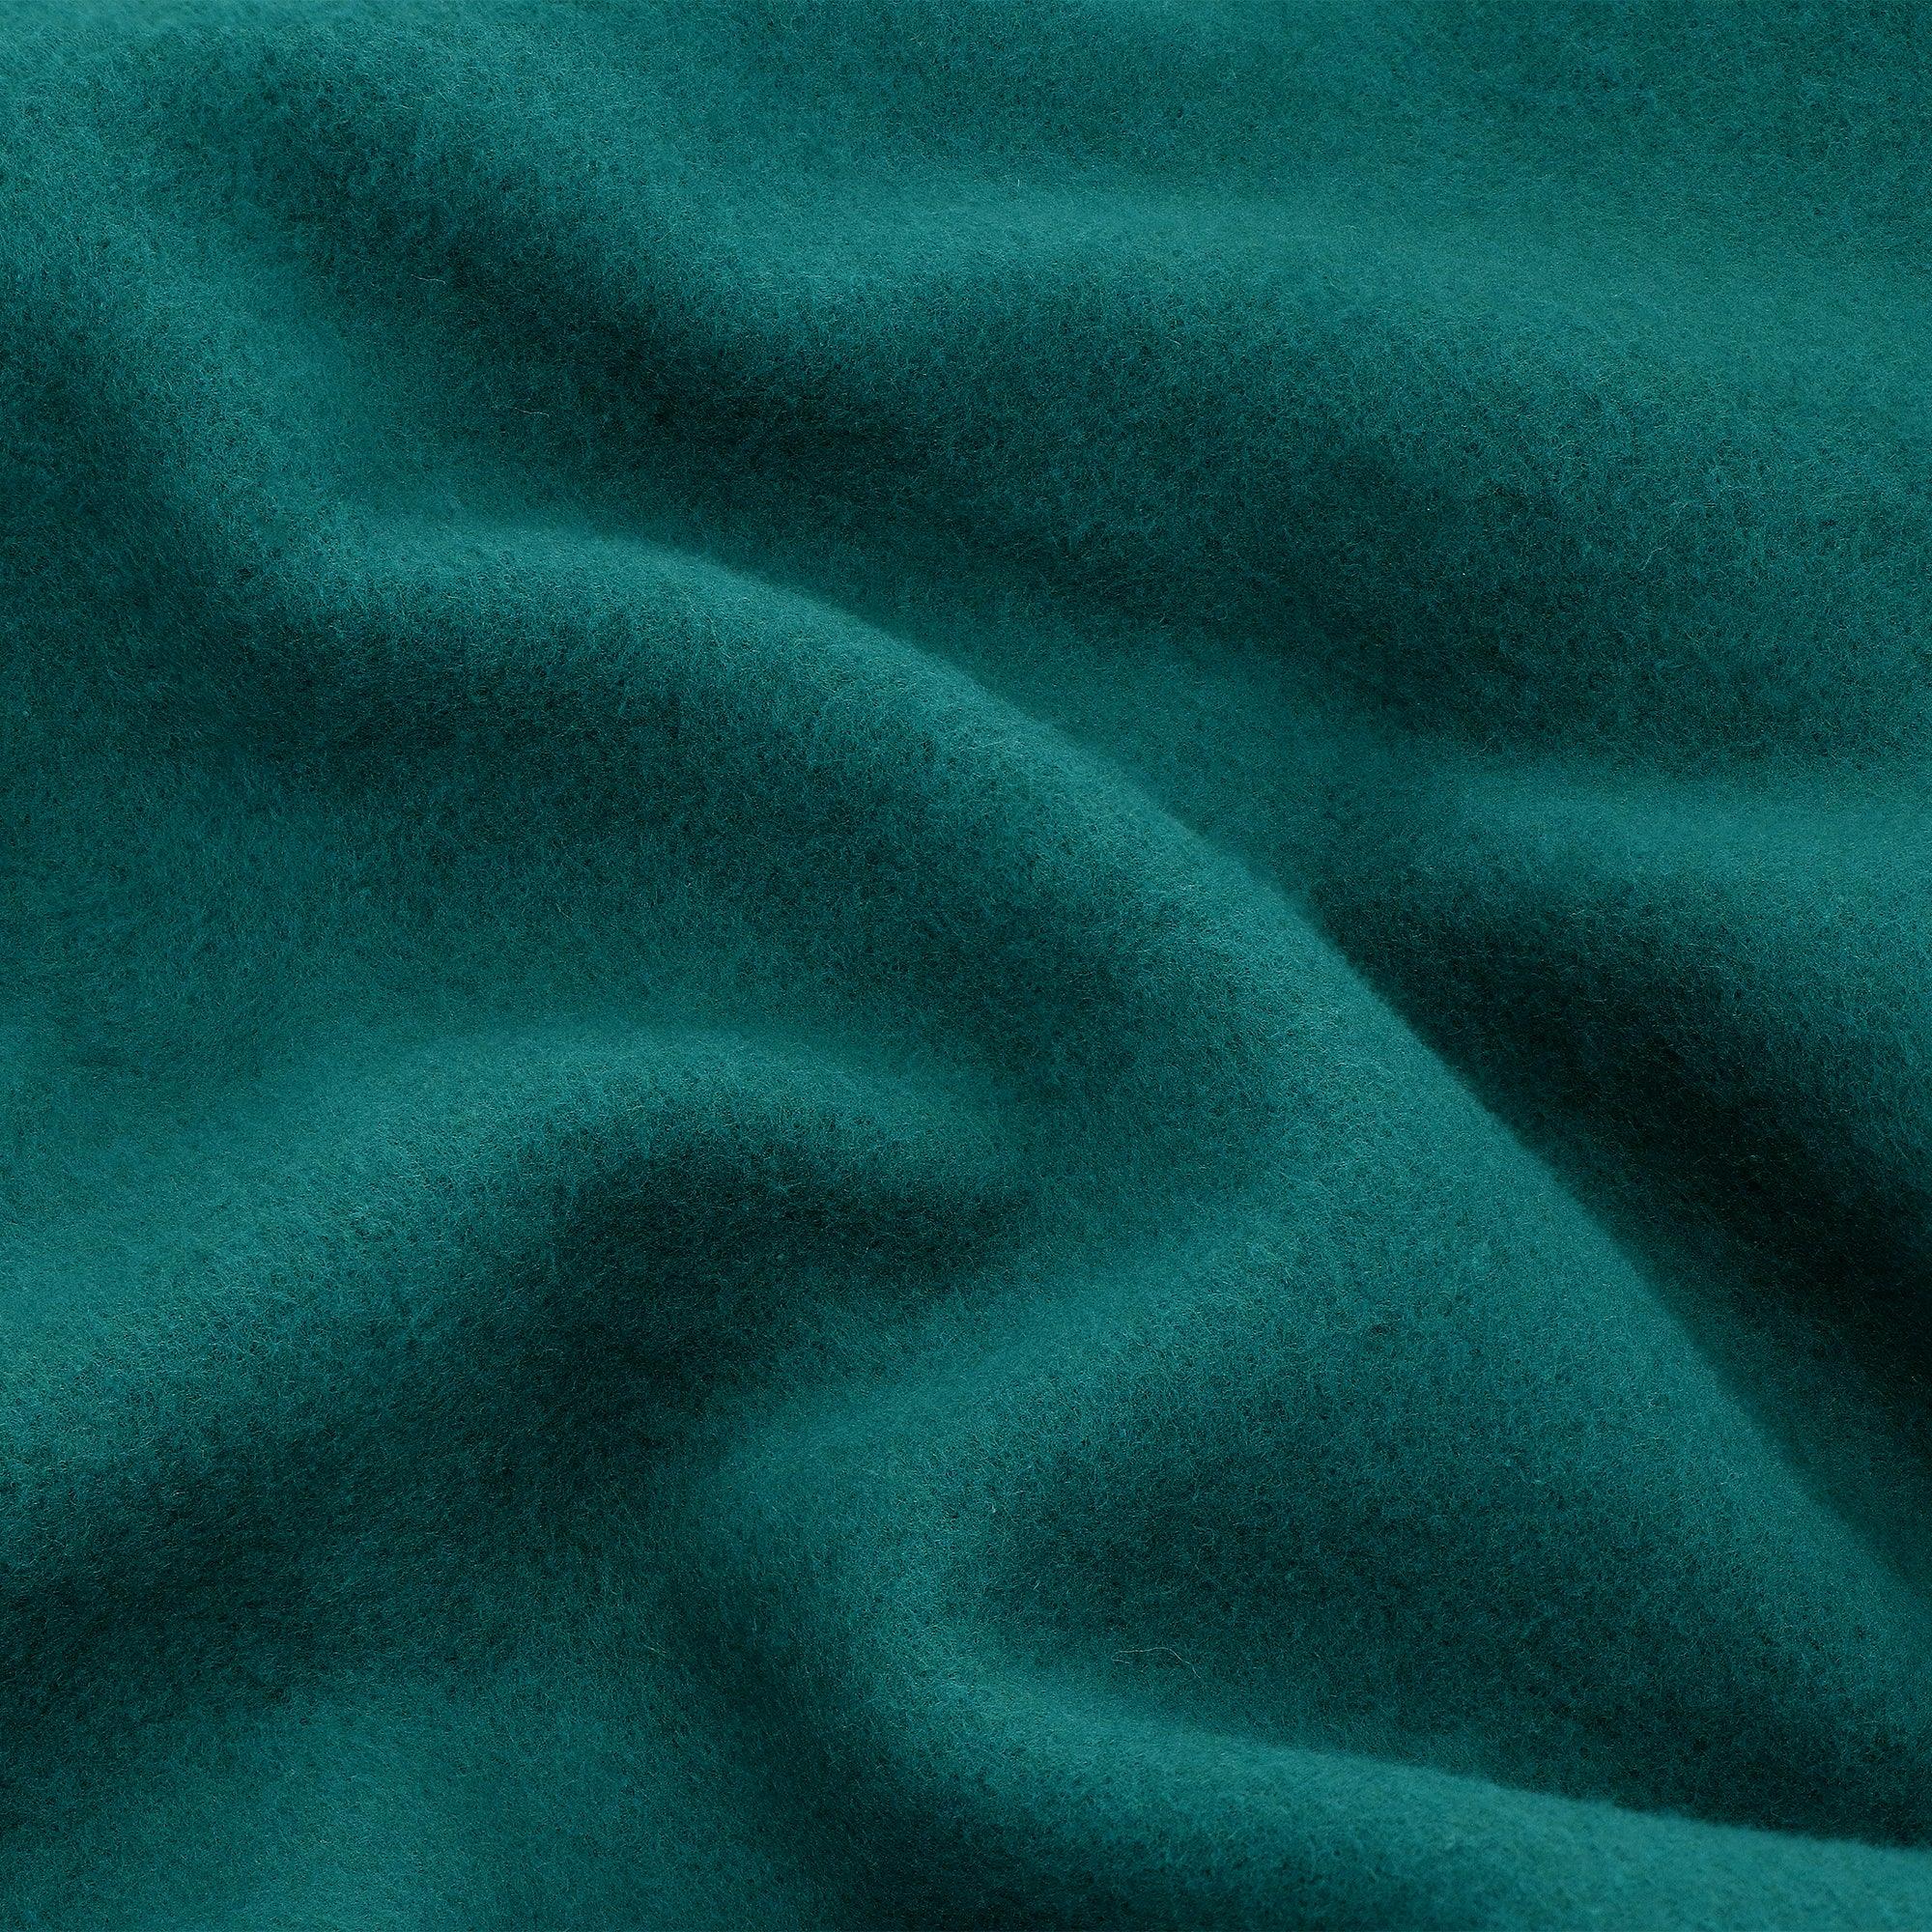 Unisex 'Picnic time' sweater - picnic blanket - Jasper green - Ridges And Steam